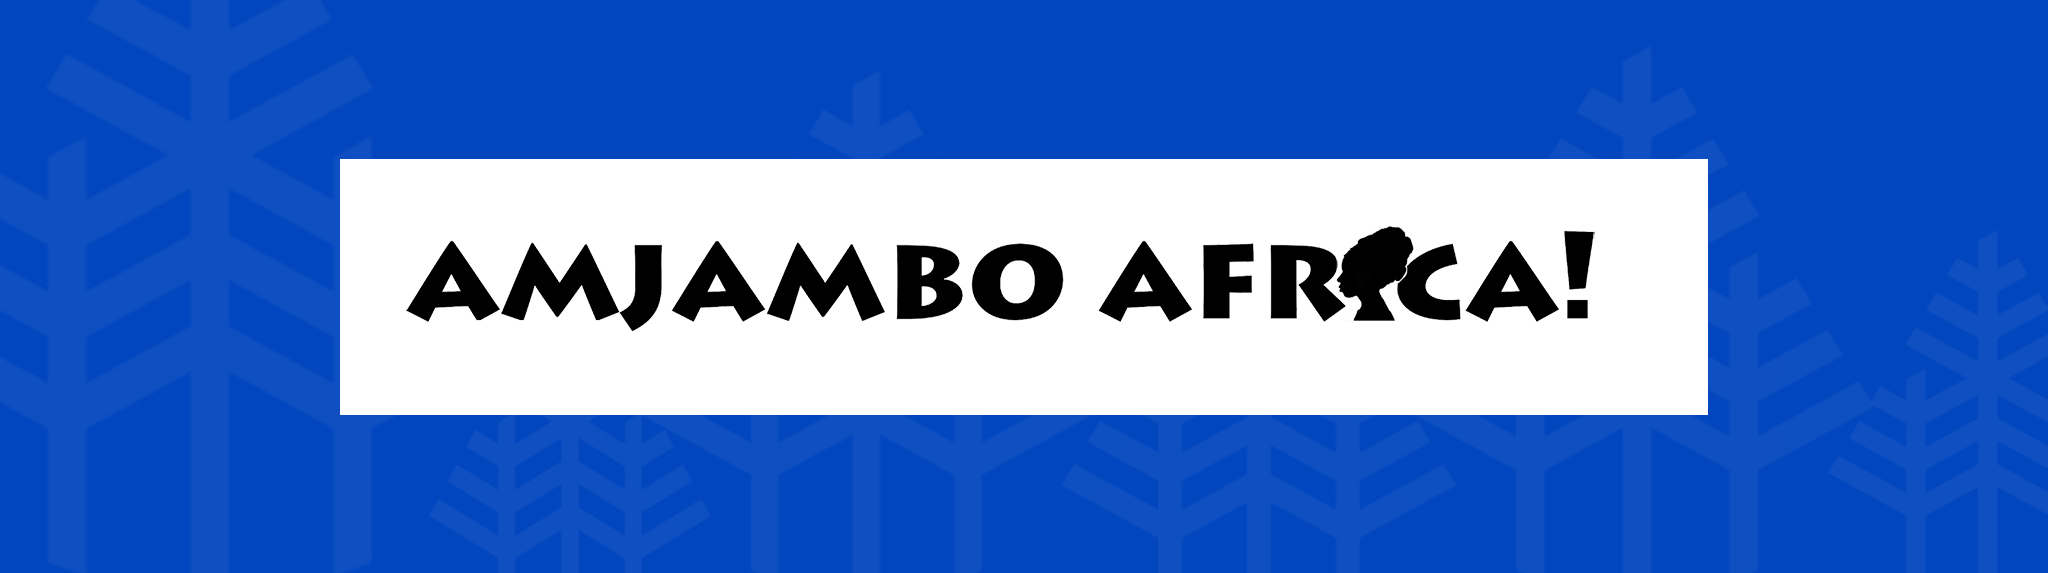 amjambo africa banner